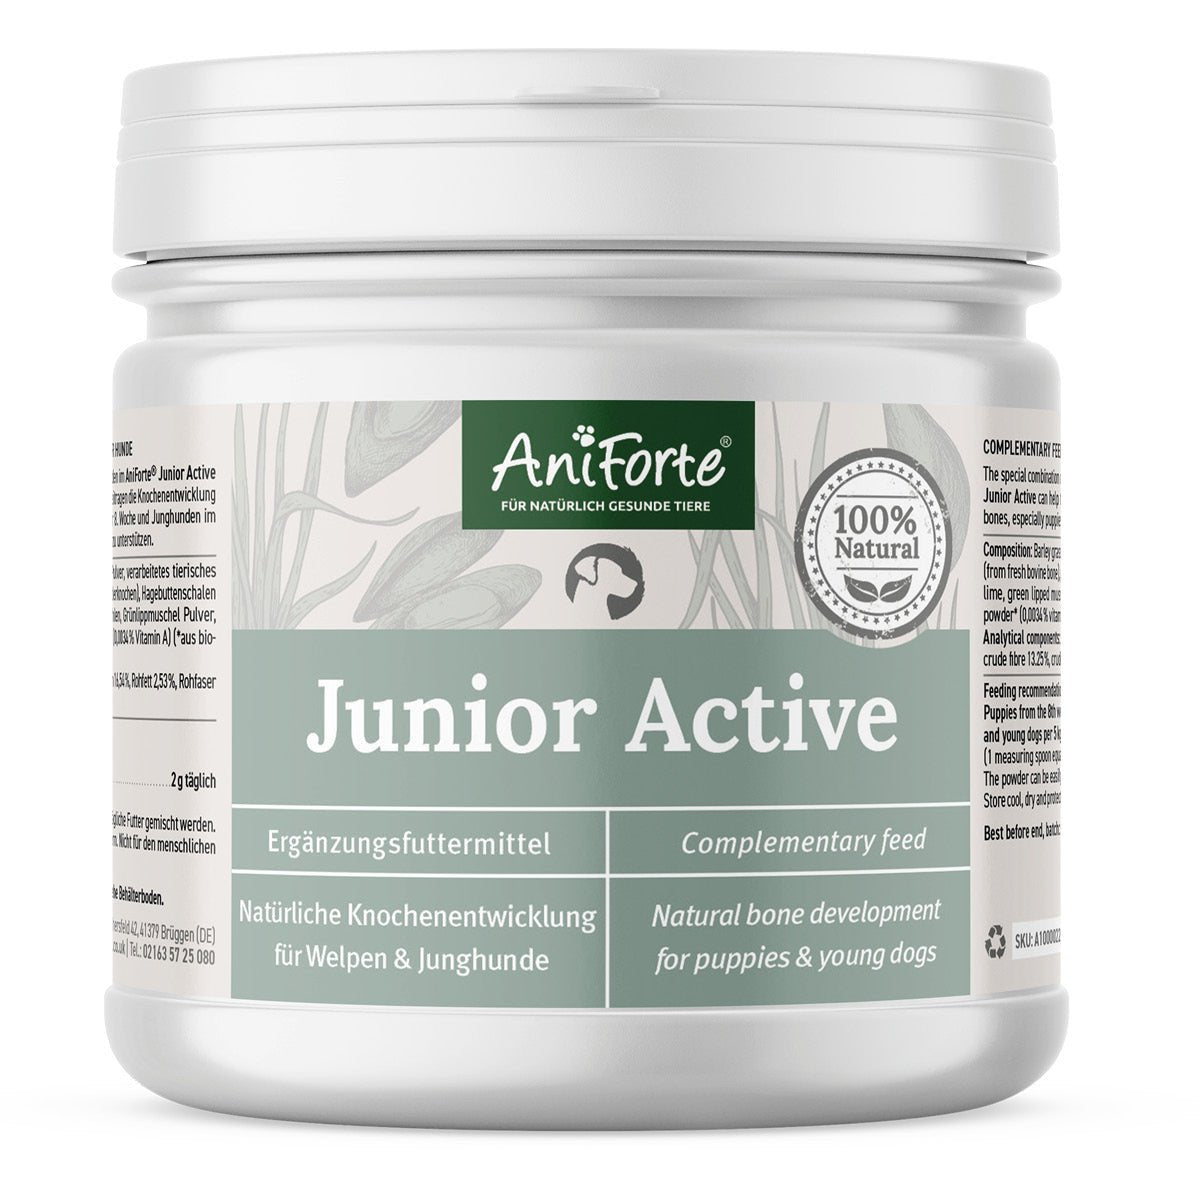 Junior Active - AniForte